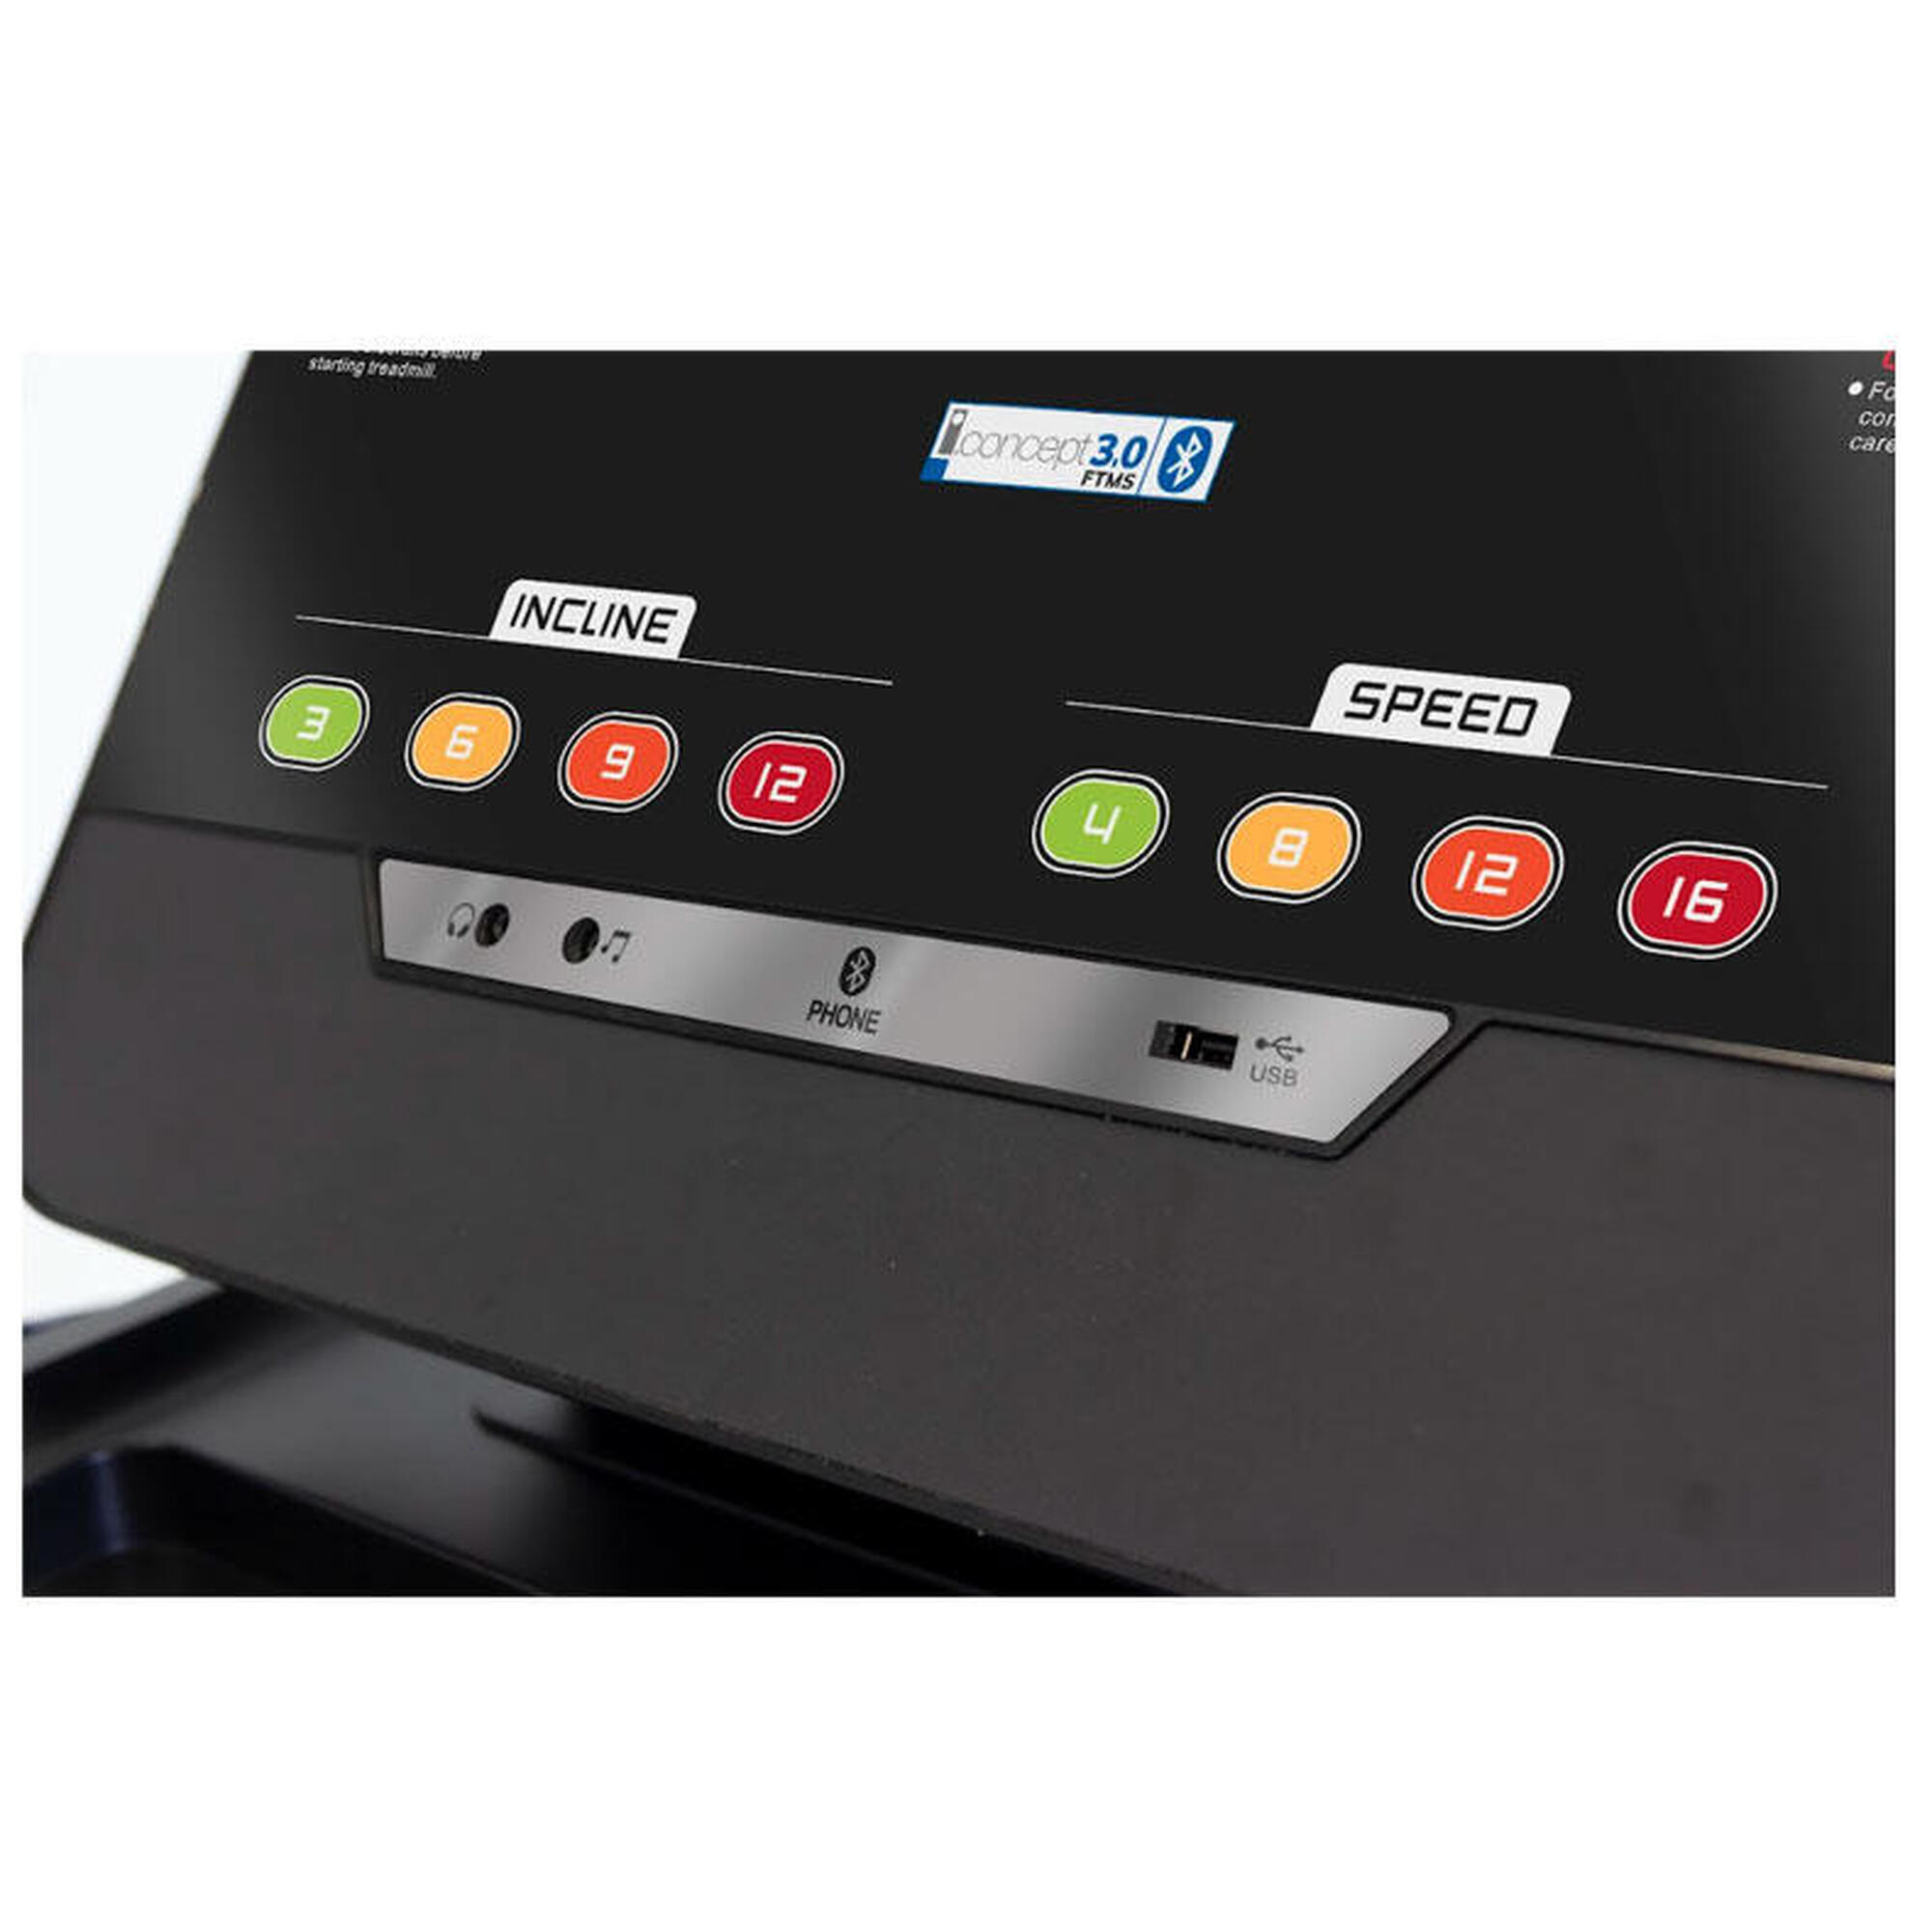 Tapis roulant - Boxster II - Kinomap,Zwift - 20km/h - 150x51cm - LCD